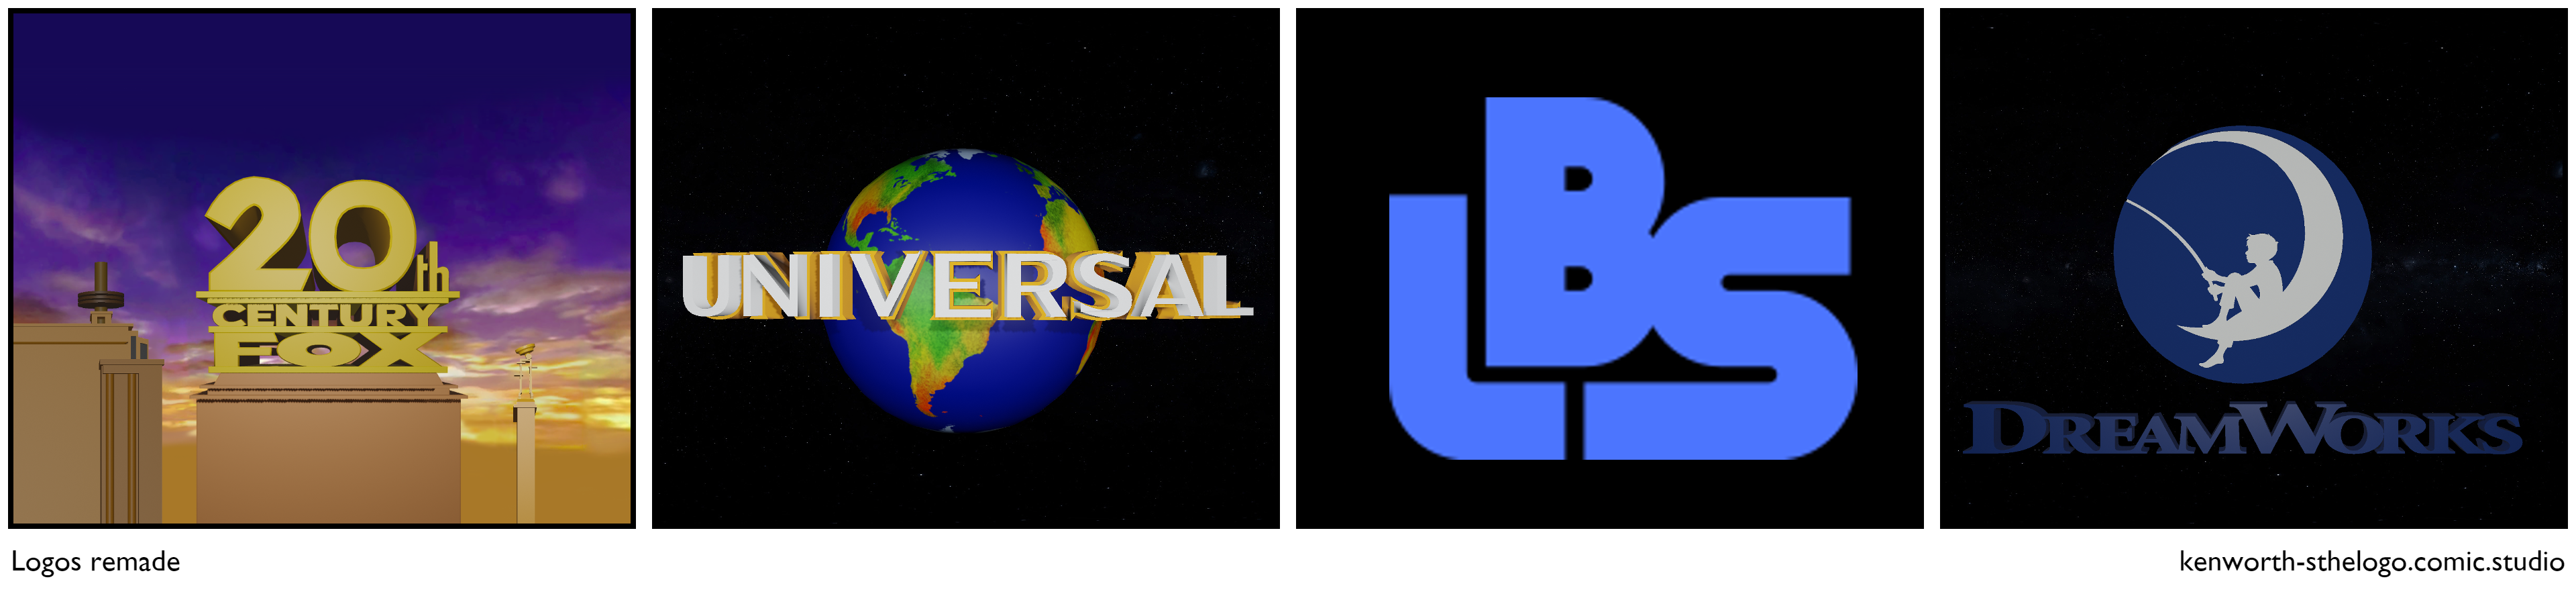 Logos remade